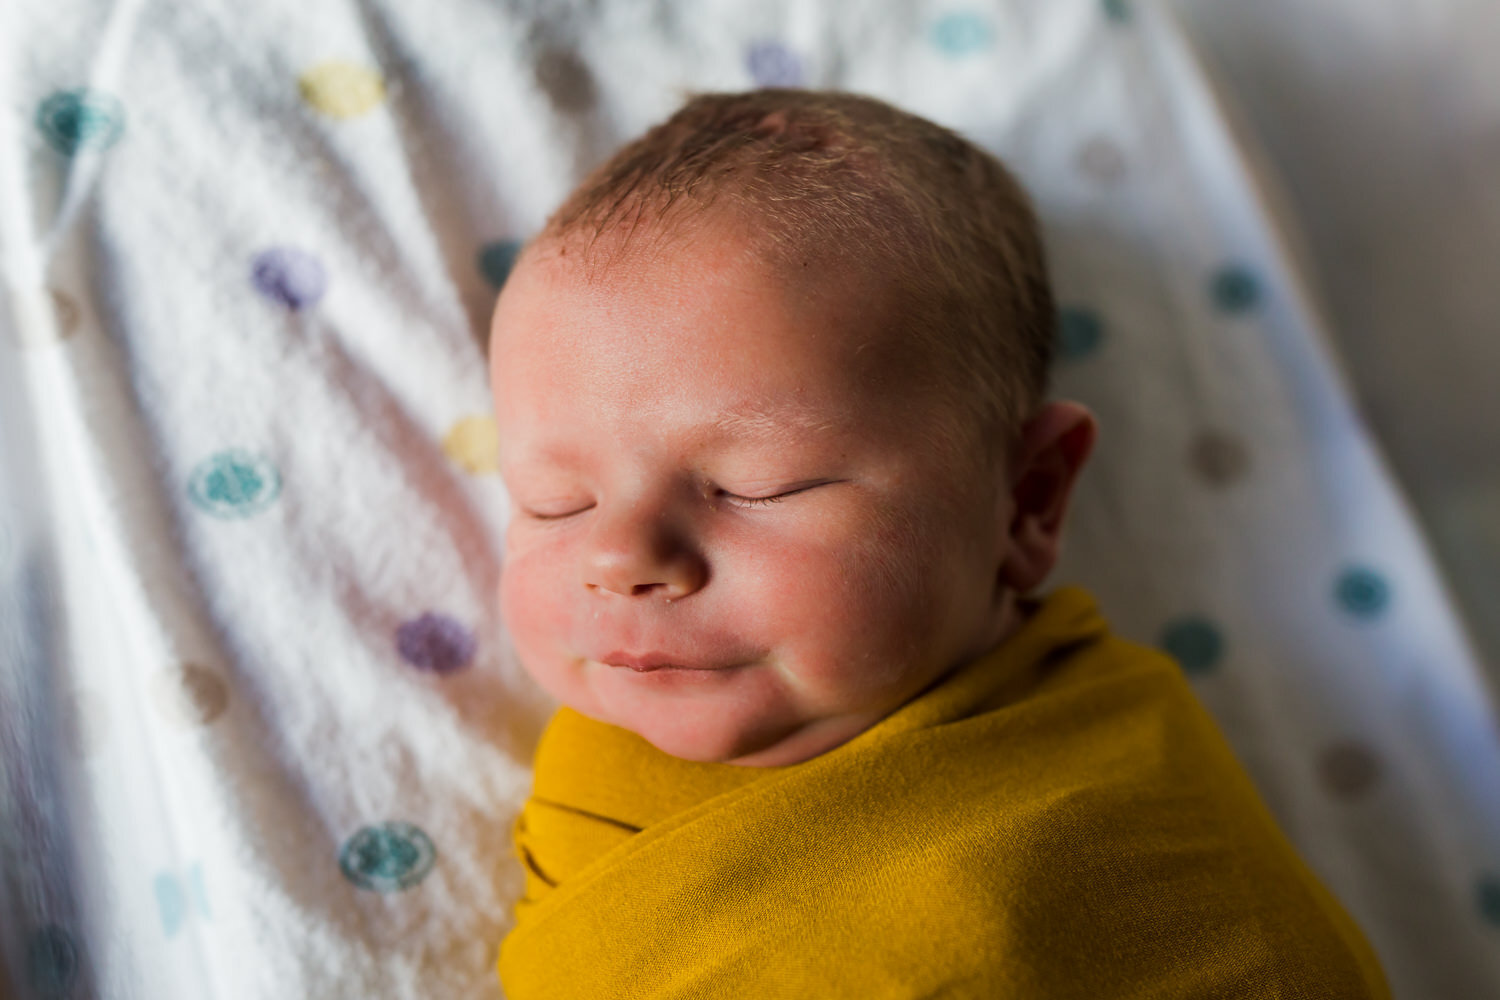 baby in hospital bassinet portrait